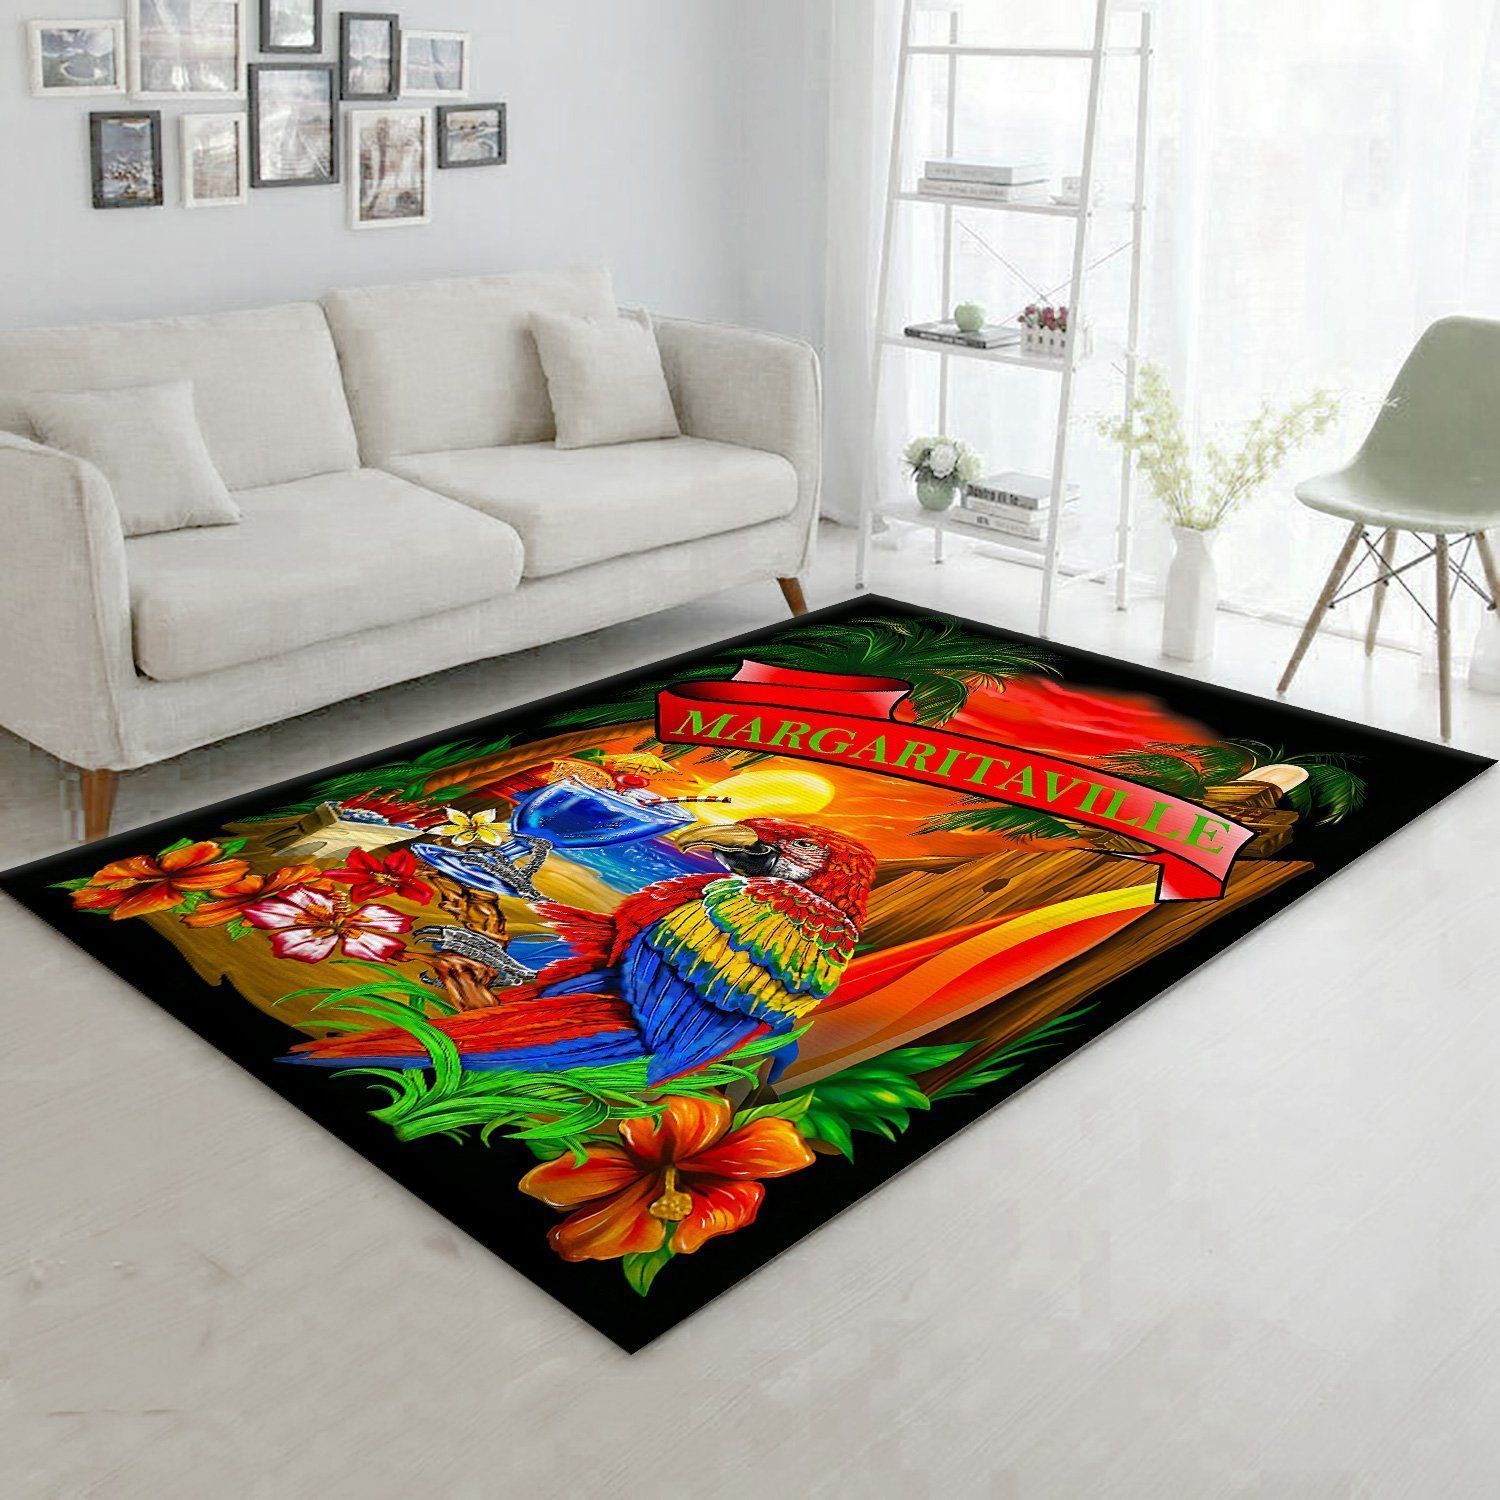 Margaritaville Area Rug Carpets Black Parrot Beach Area Rug Carpets Living Room Rugs Floor Decor - Indoor Outdoor Rugs